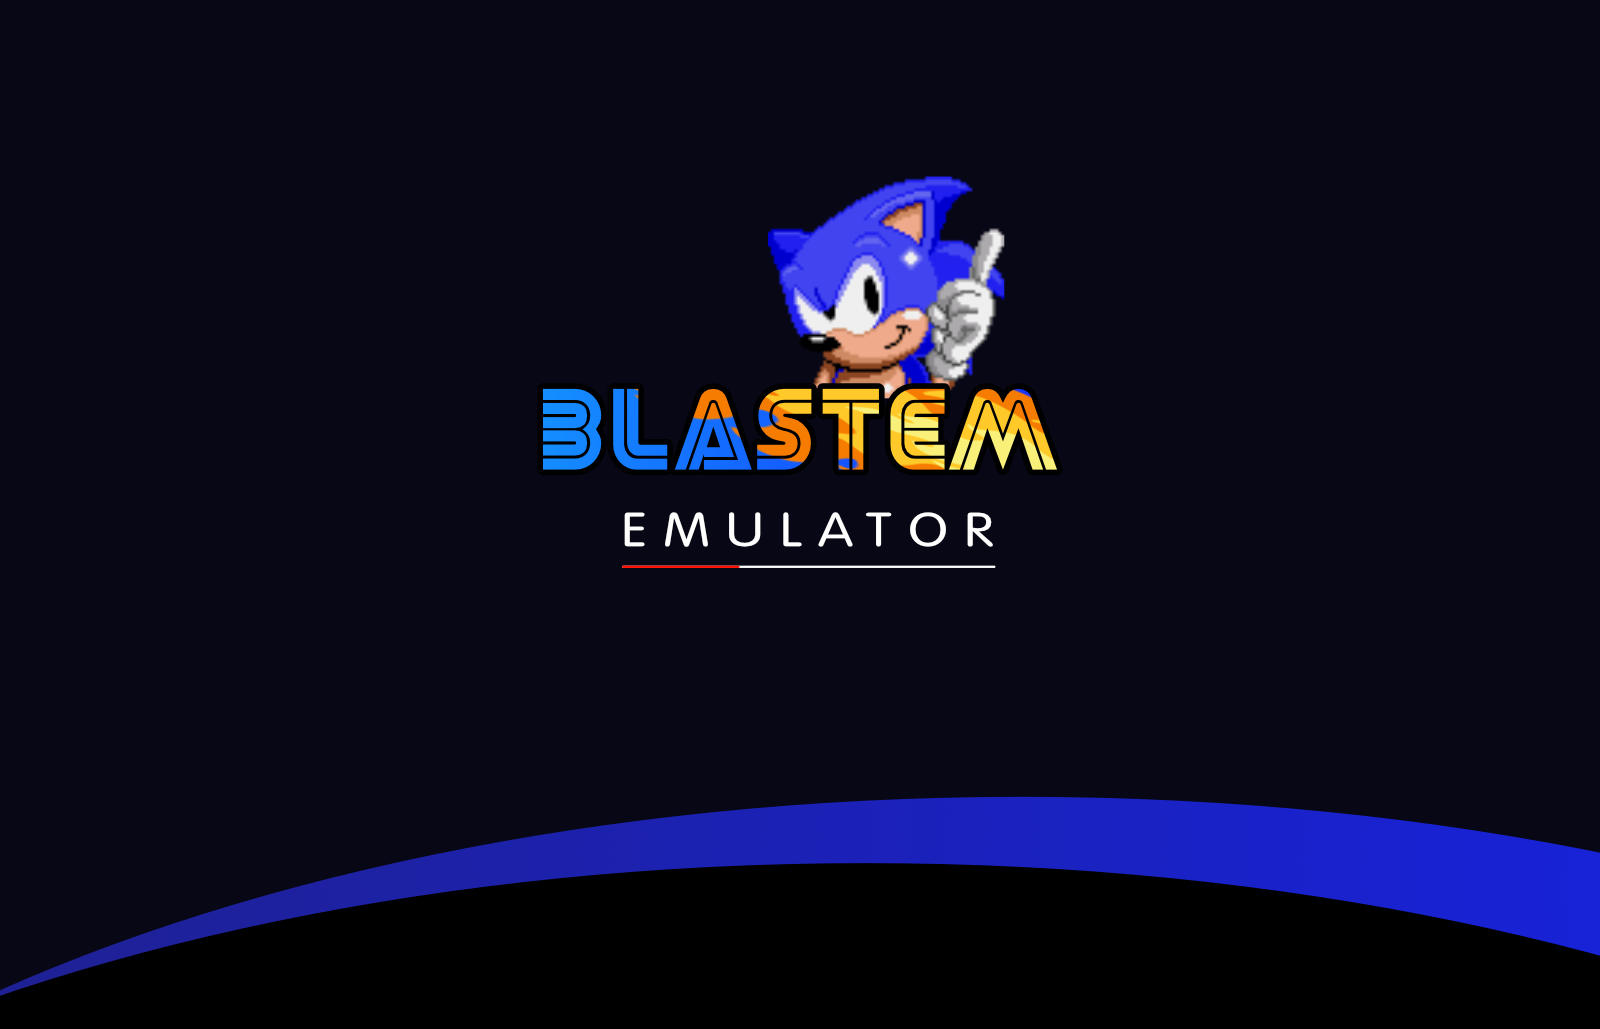 BlastEm is a Sega Emulator for PC, Windows